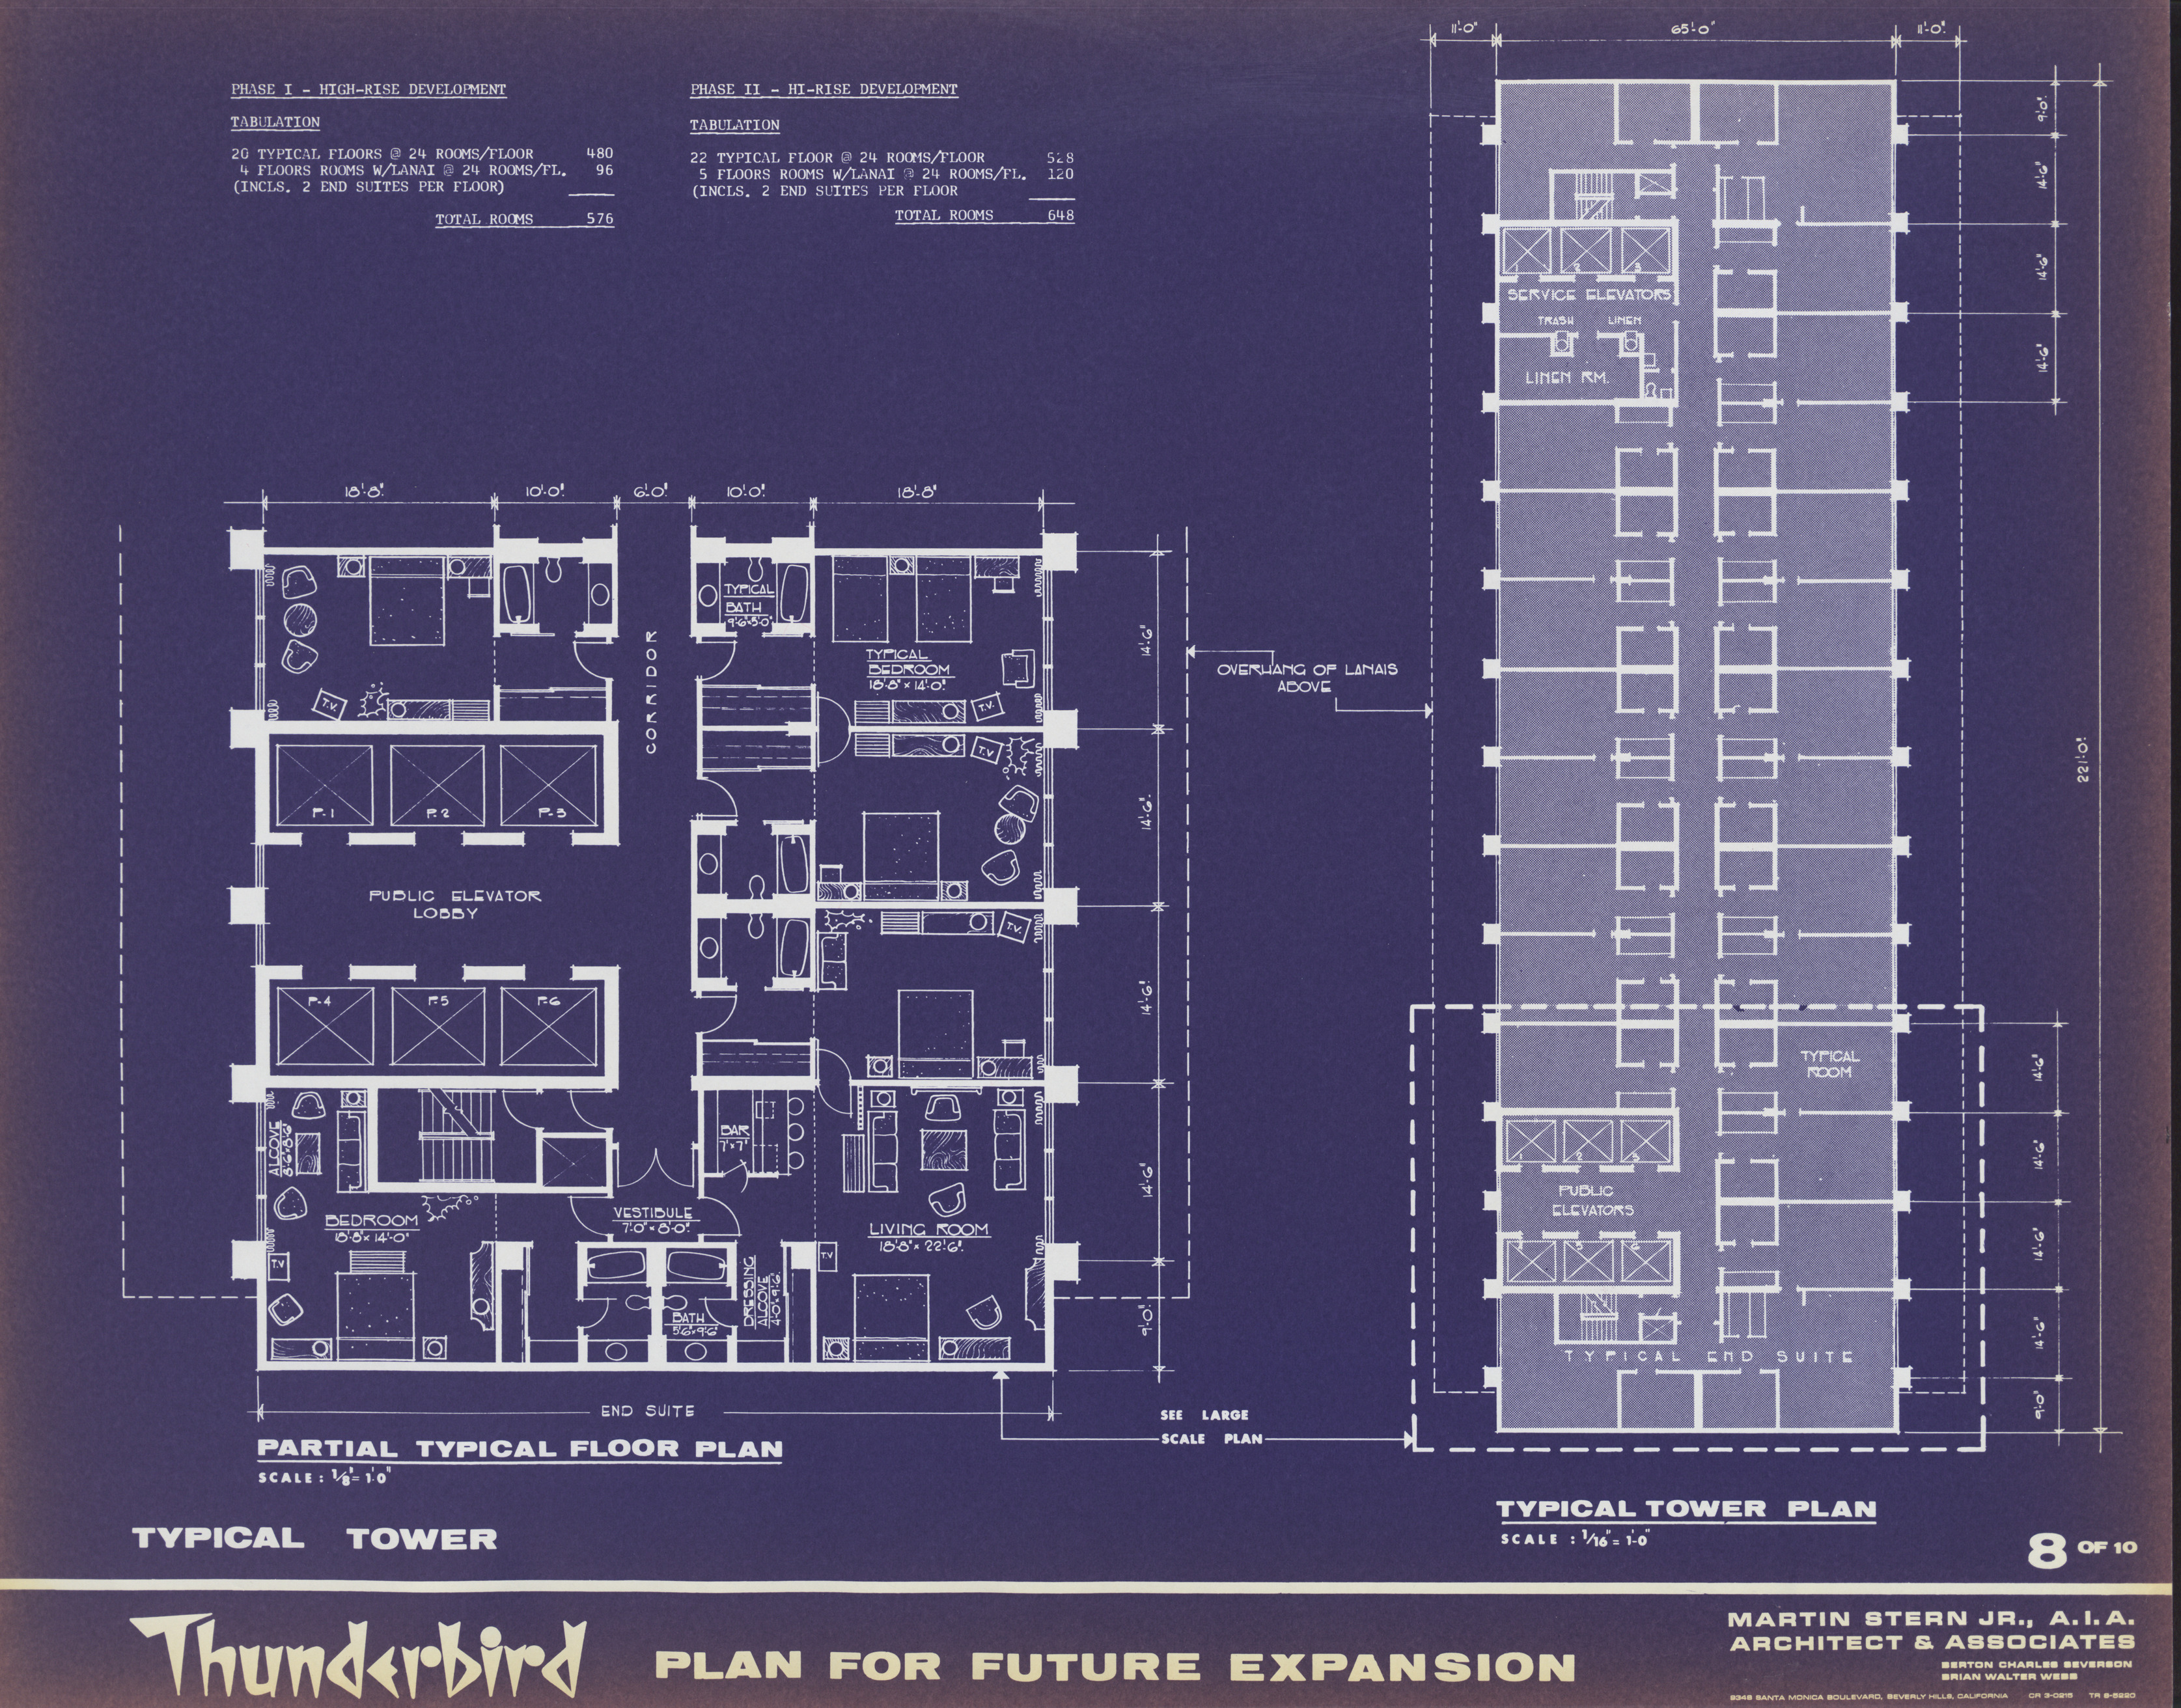 Thunderbird Plan for Future Expansion Proposal, image 8